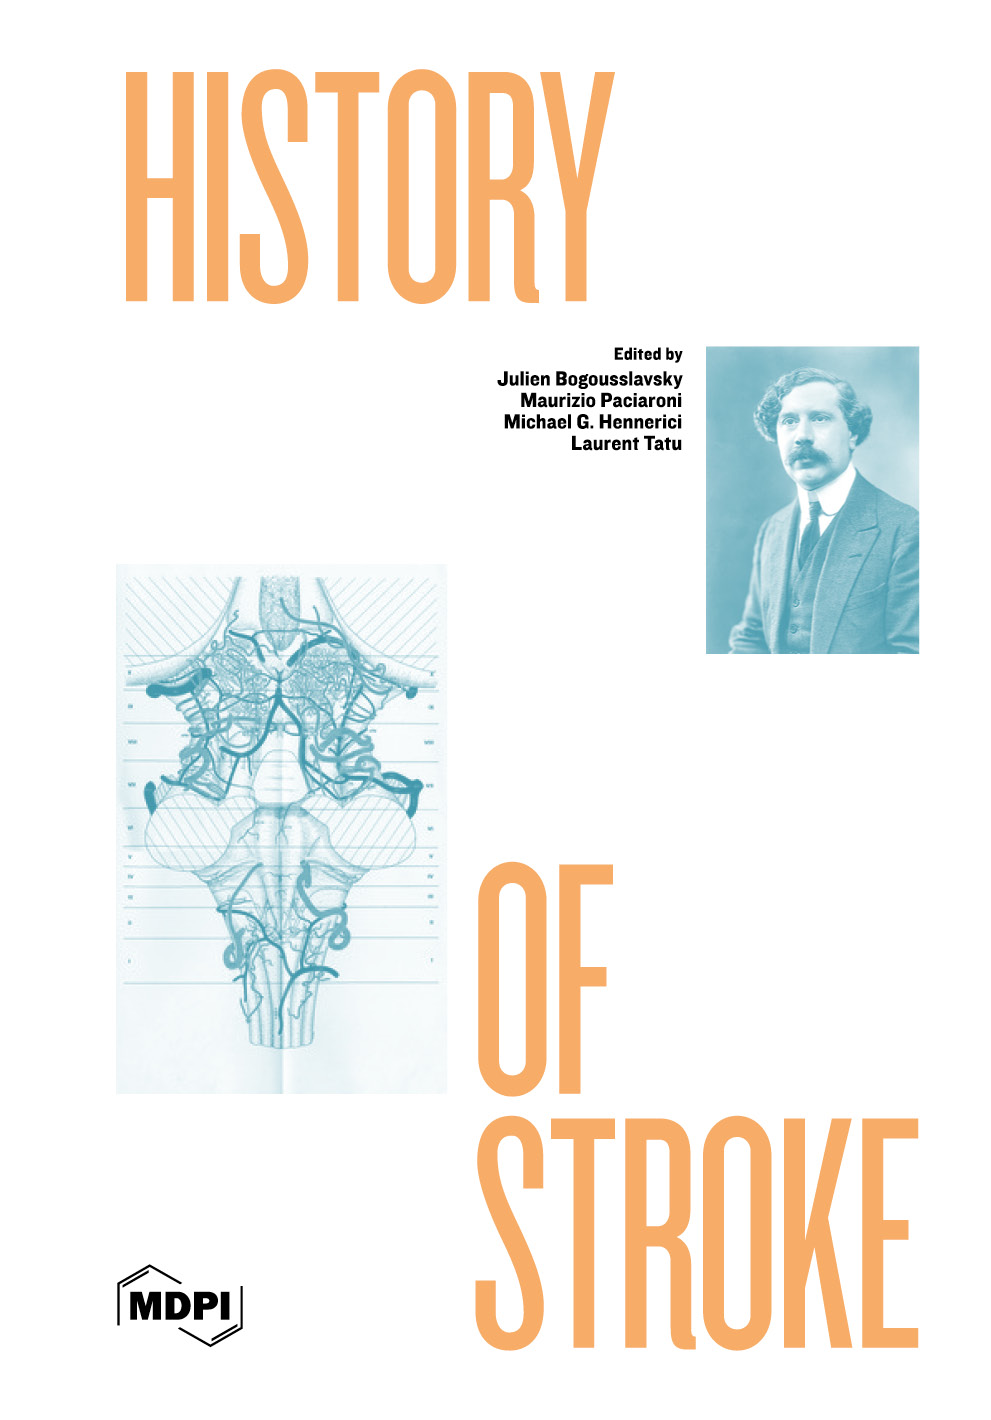 History of Stroke